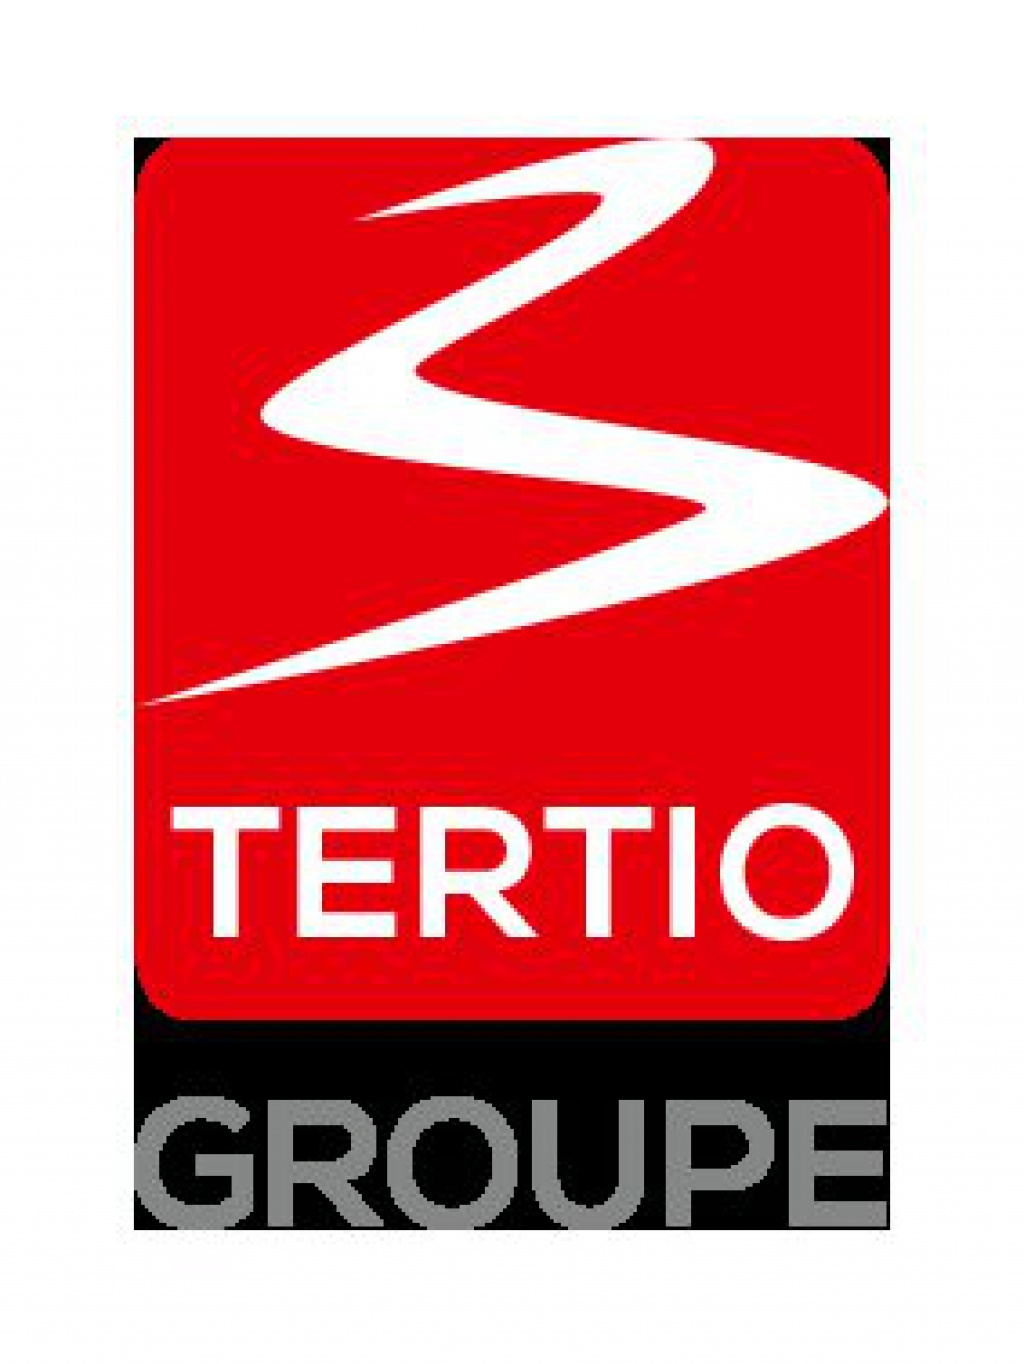 Le groupe TERTIO recrute un Chargé de promo radios h/f !